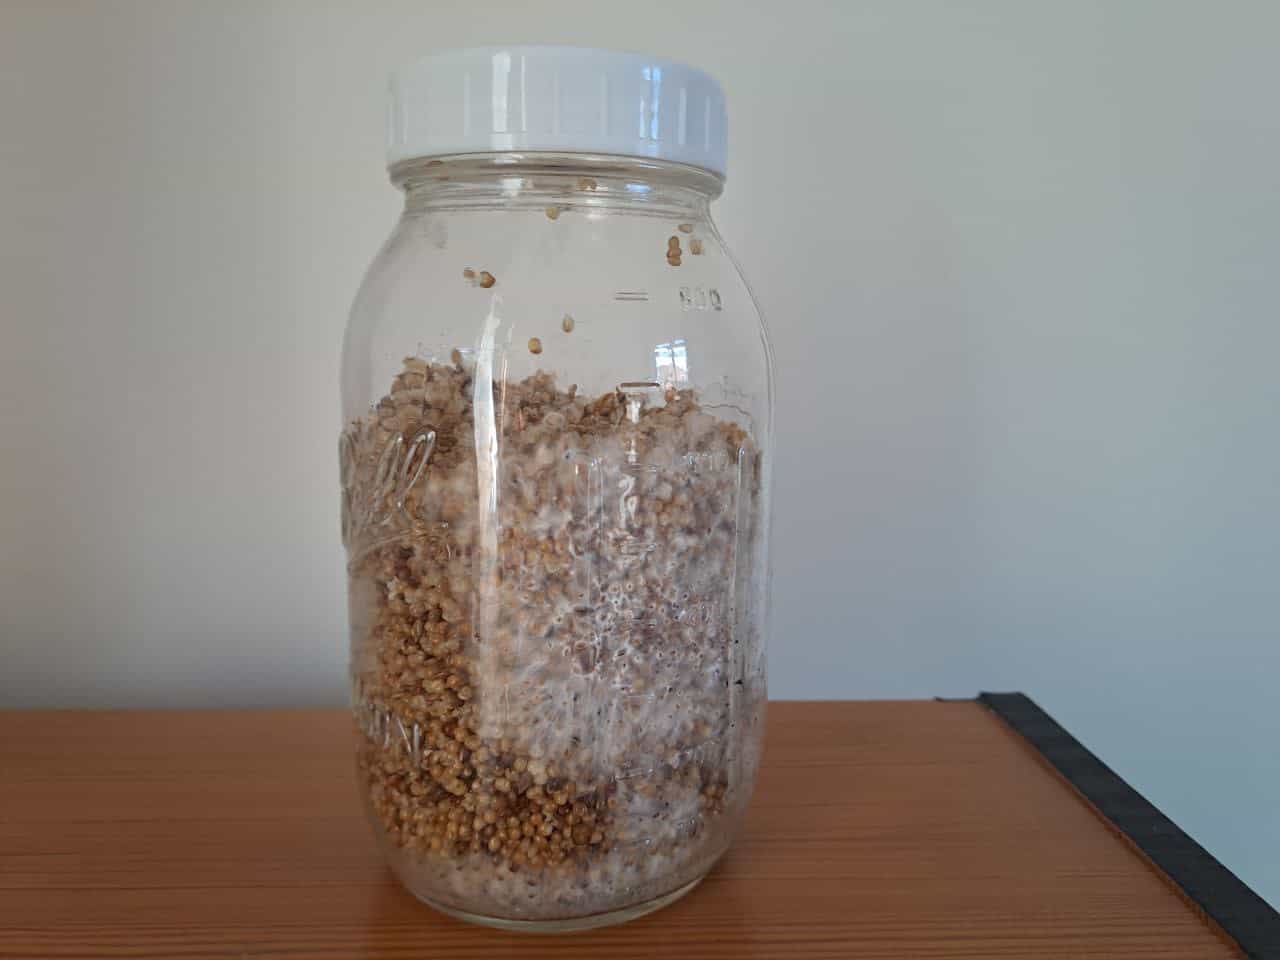 Millet Grain jar injected with liquid culture